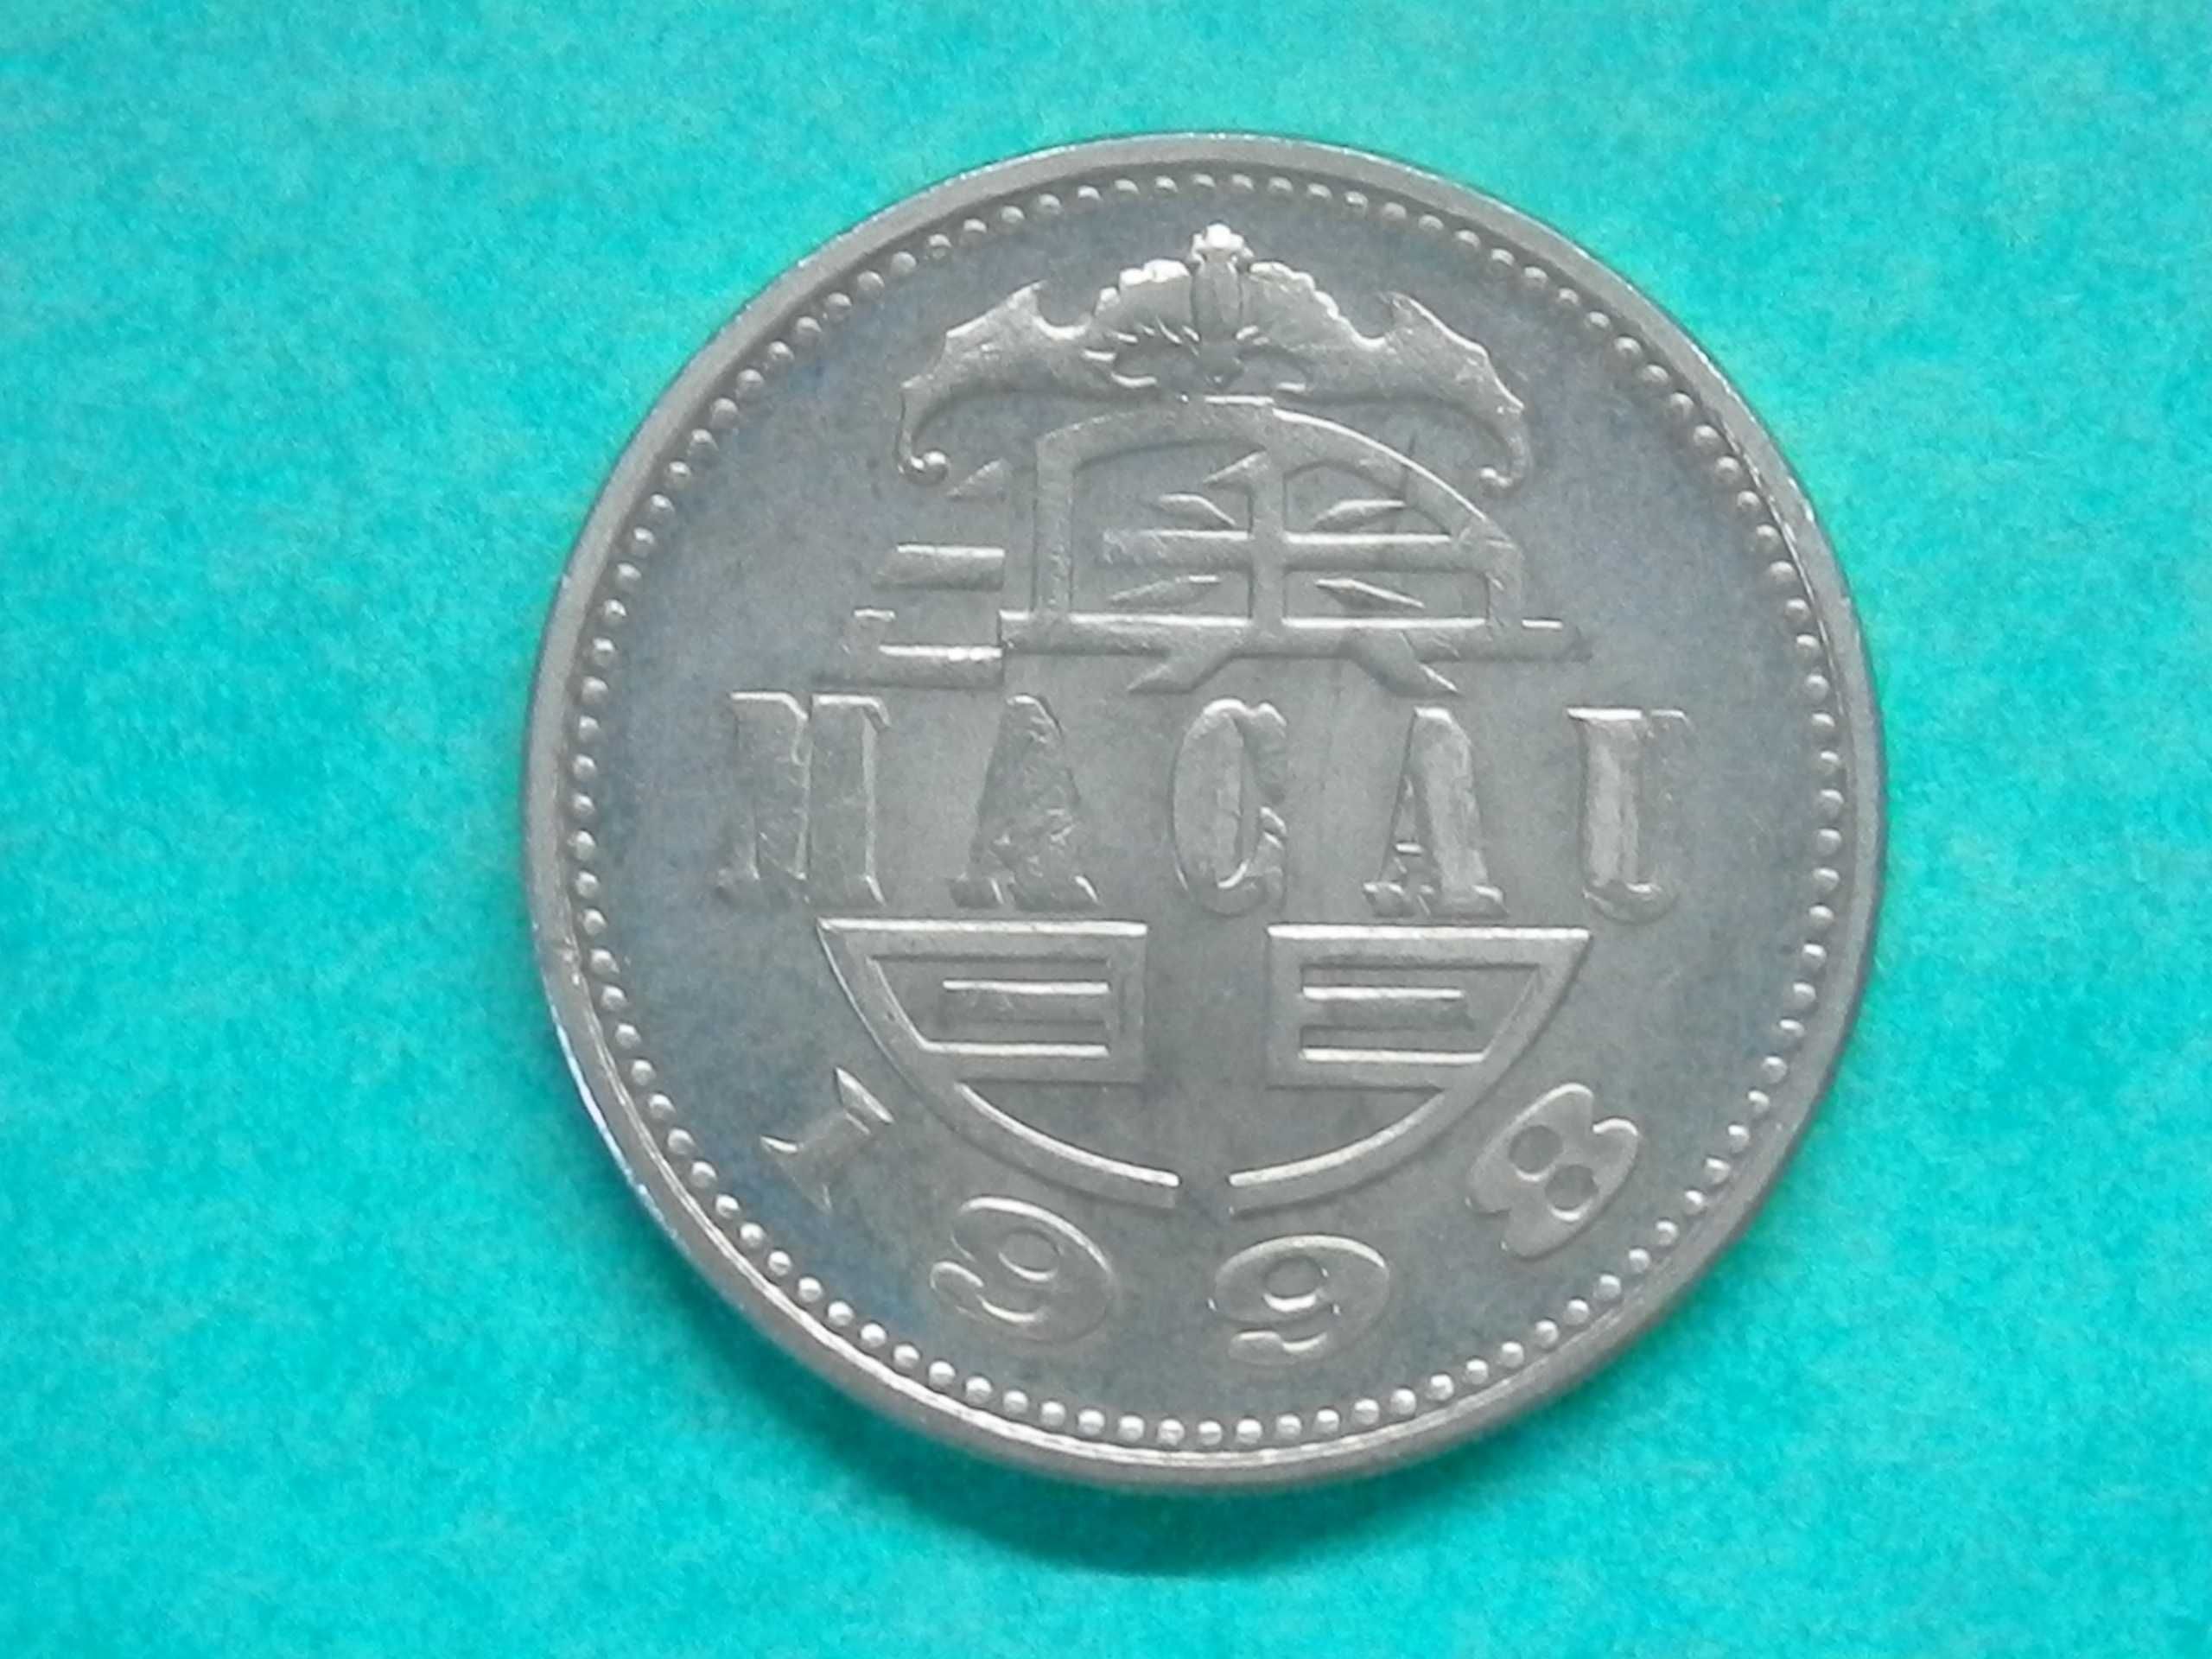 705 - Macau: 1 Pataca 1998 cuproníquel, por 2,00